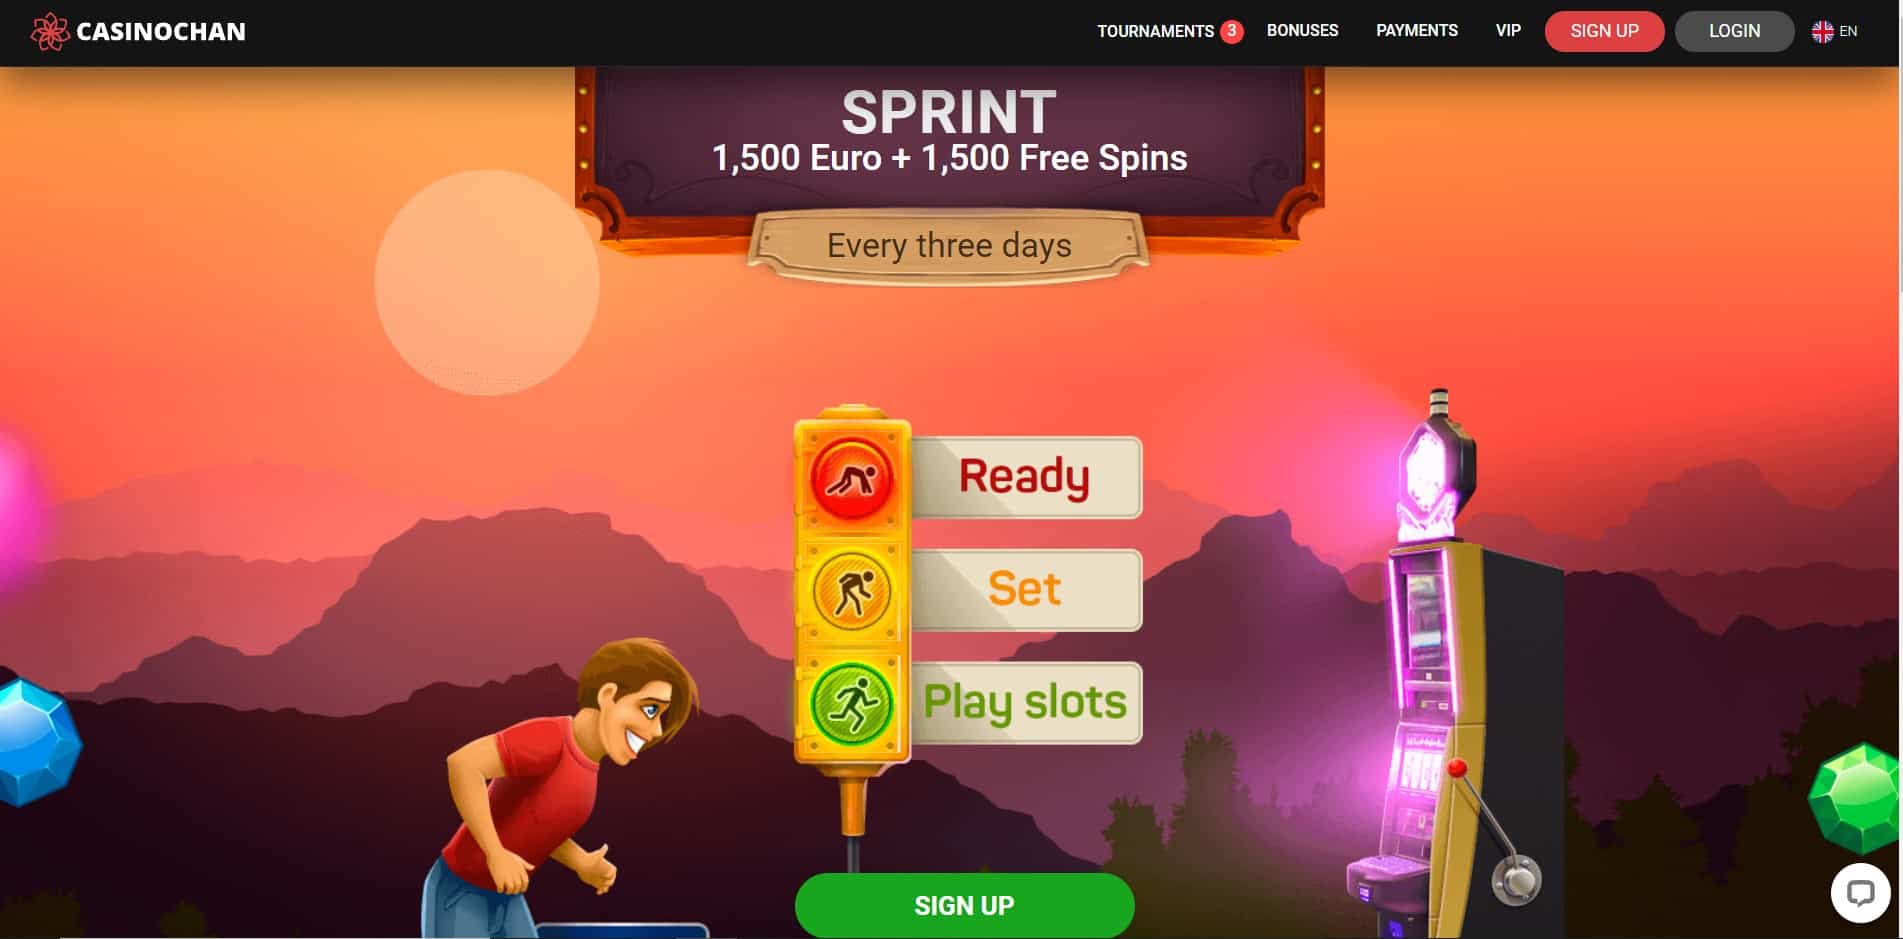 Casinochan Casino Sprint